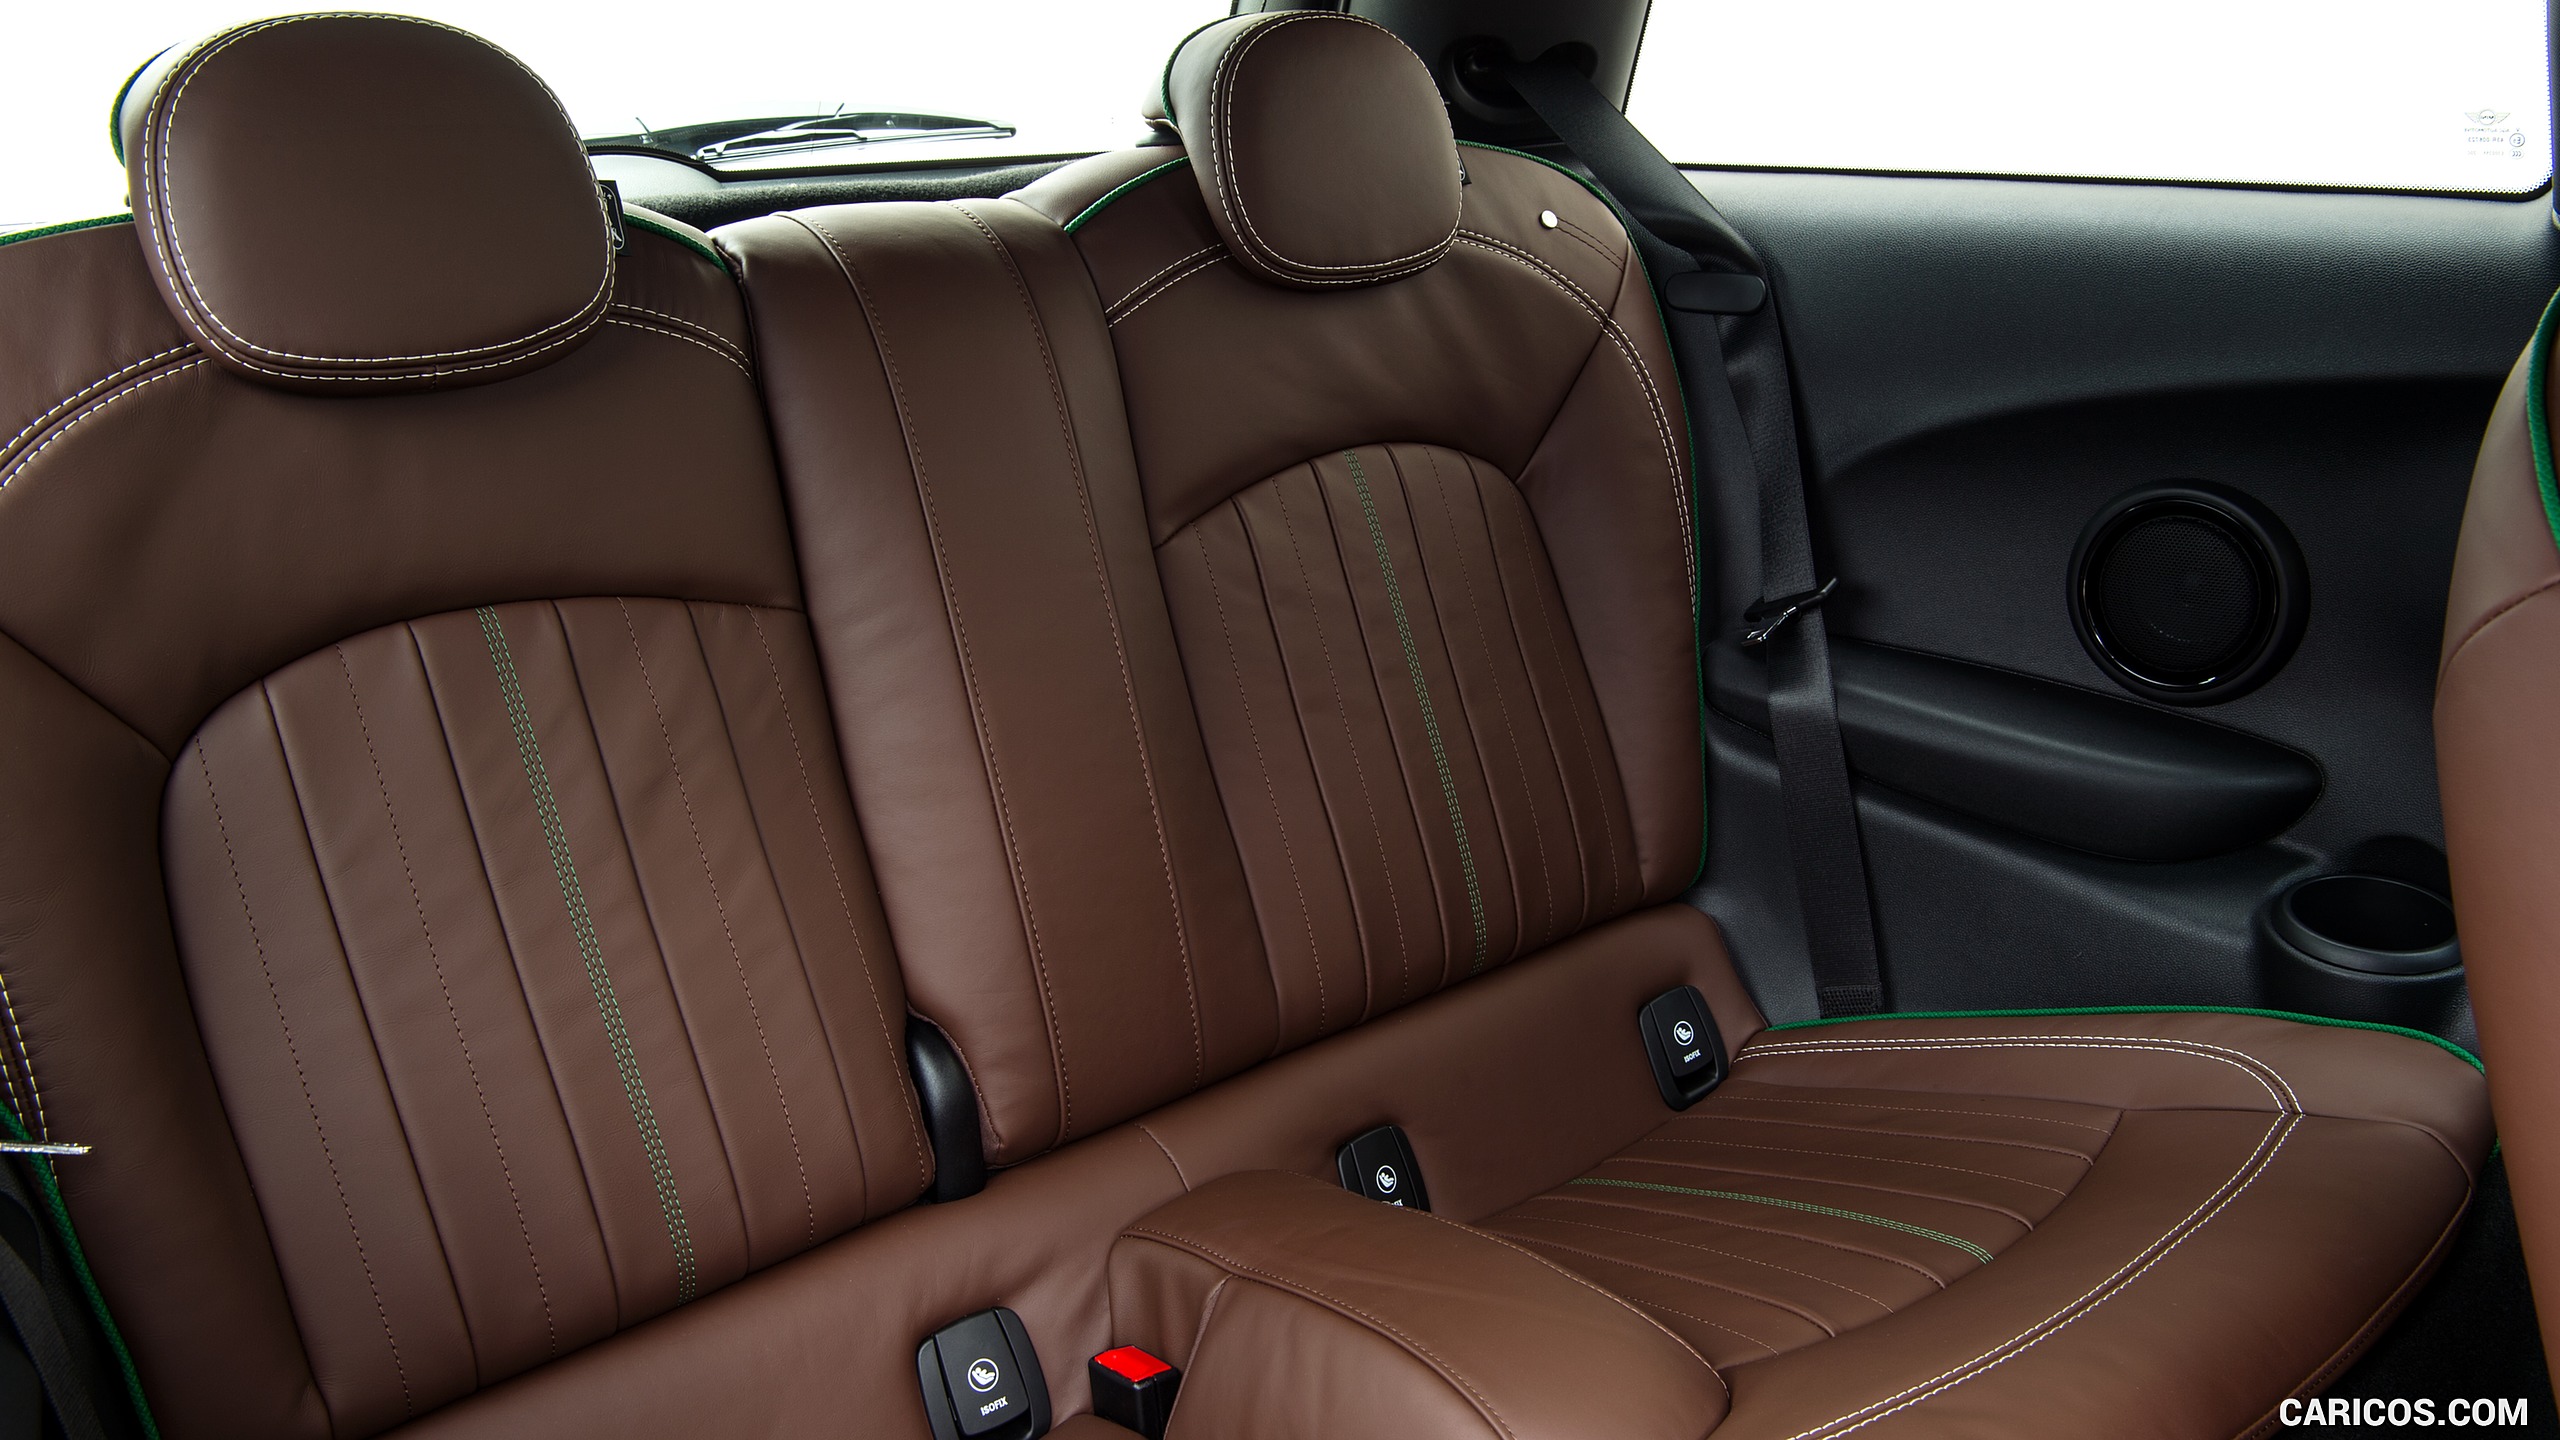 2019 MINI Cooper 3-Door 60 Years Edition - Interior, Rear Seats, #101 of 102